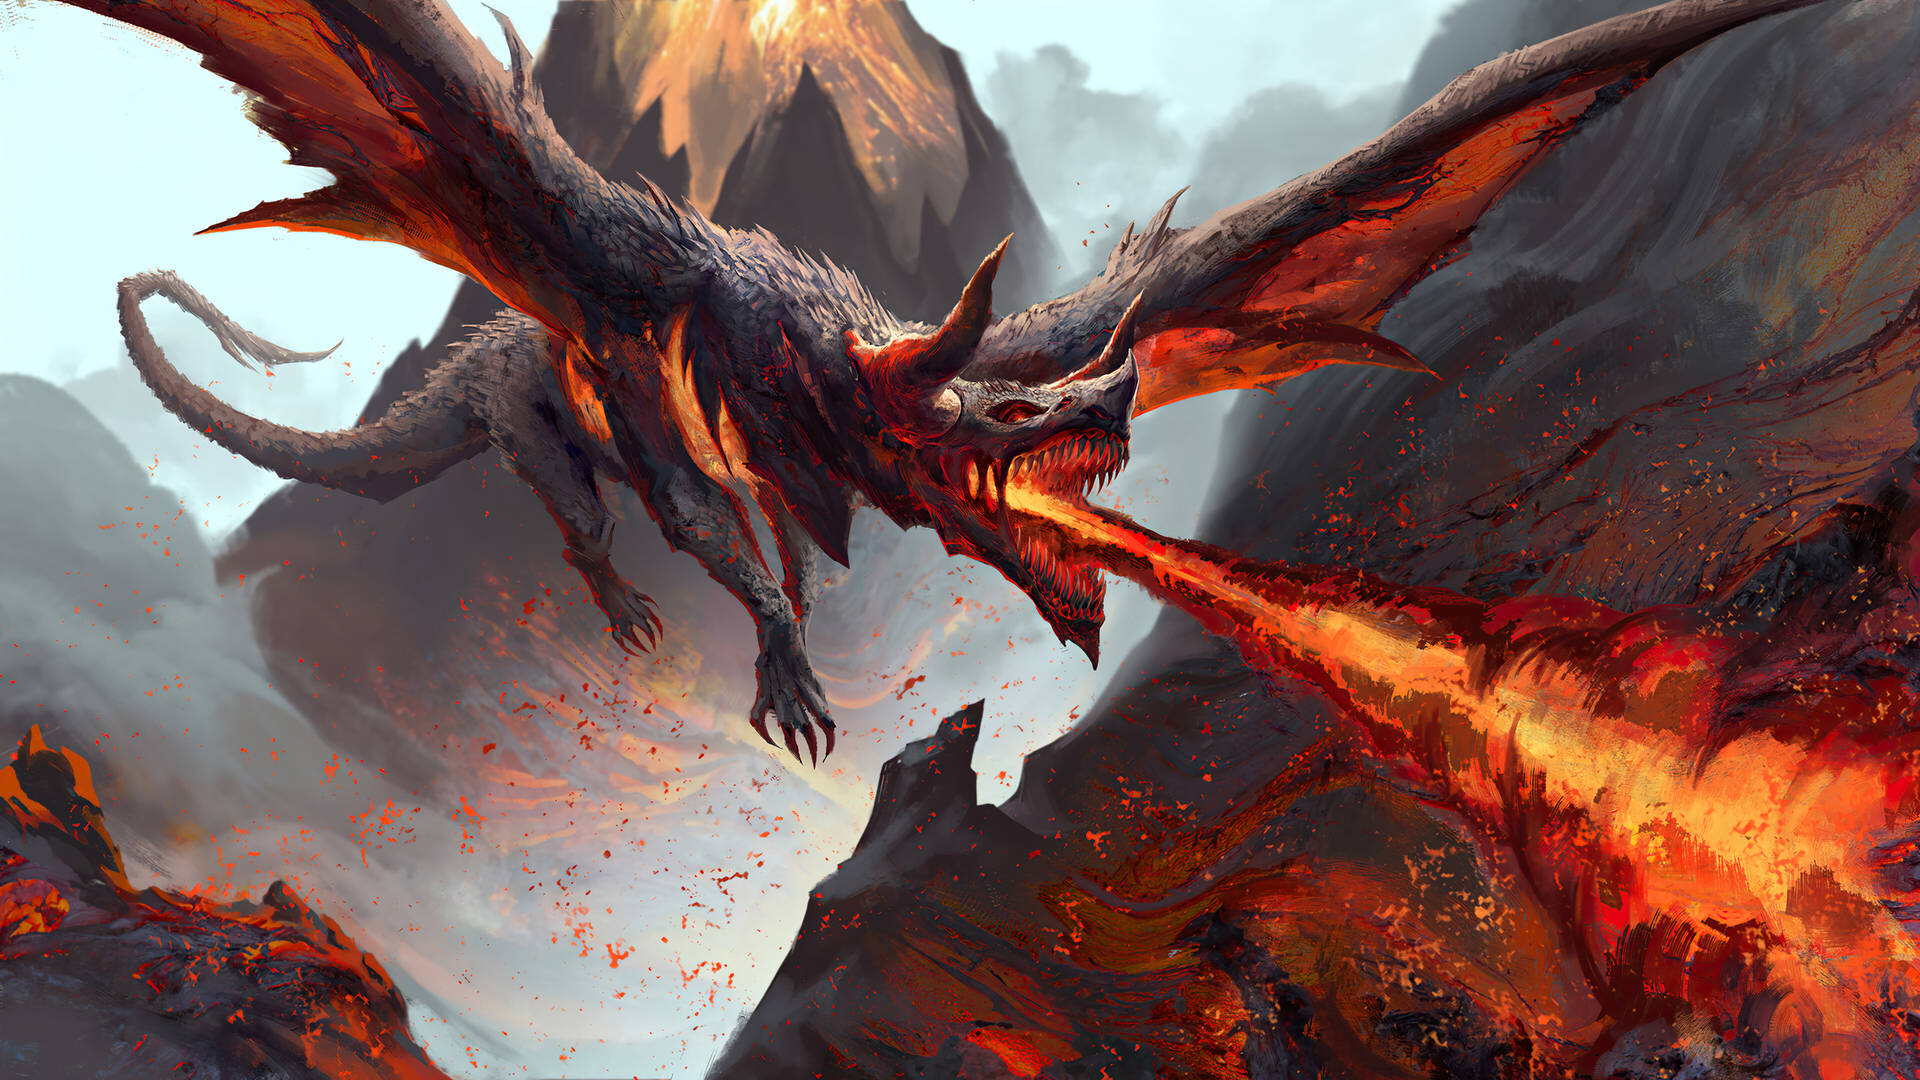 Fire-breathing Lava Dragon